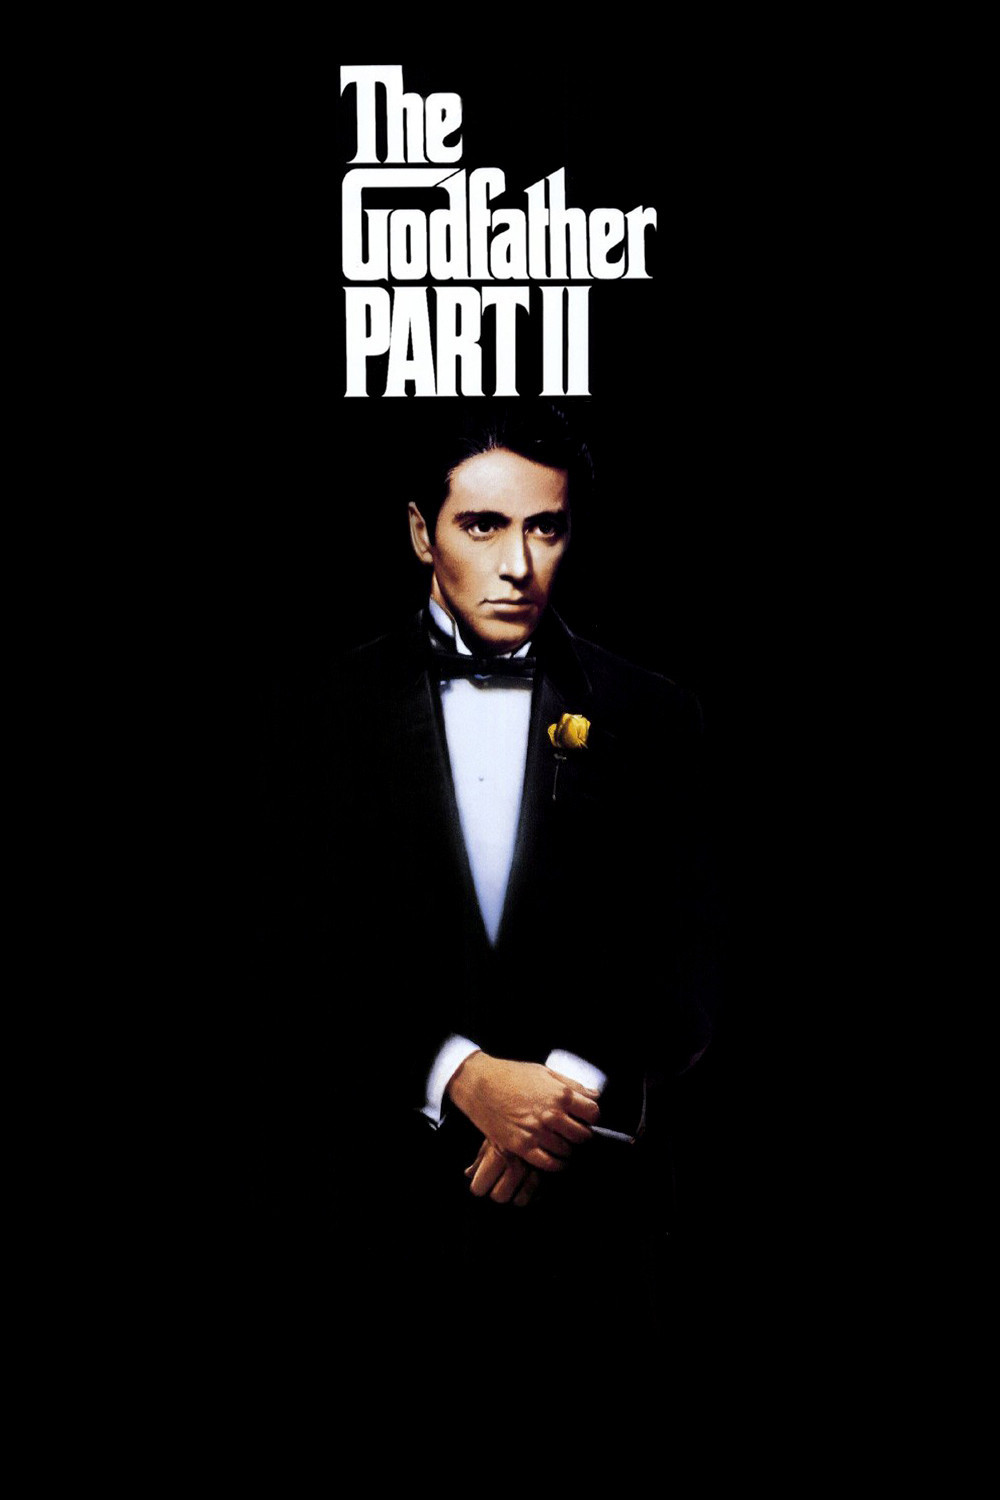 Godfather s. Крестный отец 2 the Godfather: Part II 1974 Постер. Аль Пачино крестный отец. Крестный отец 2 Постер.